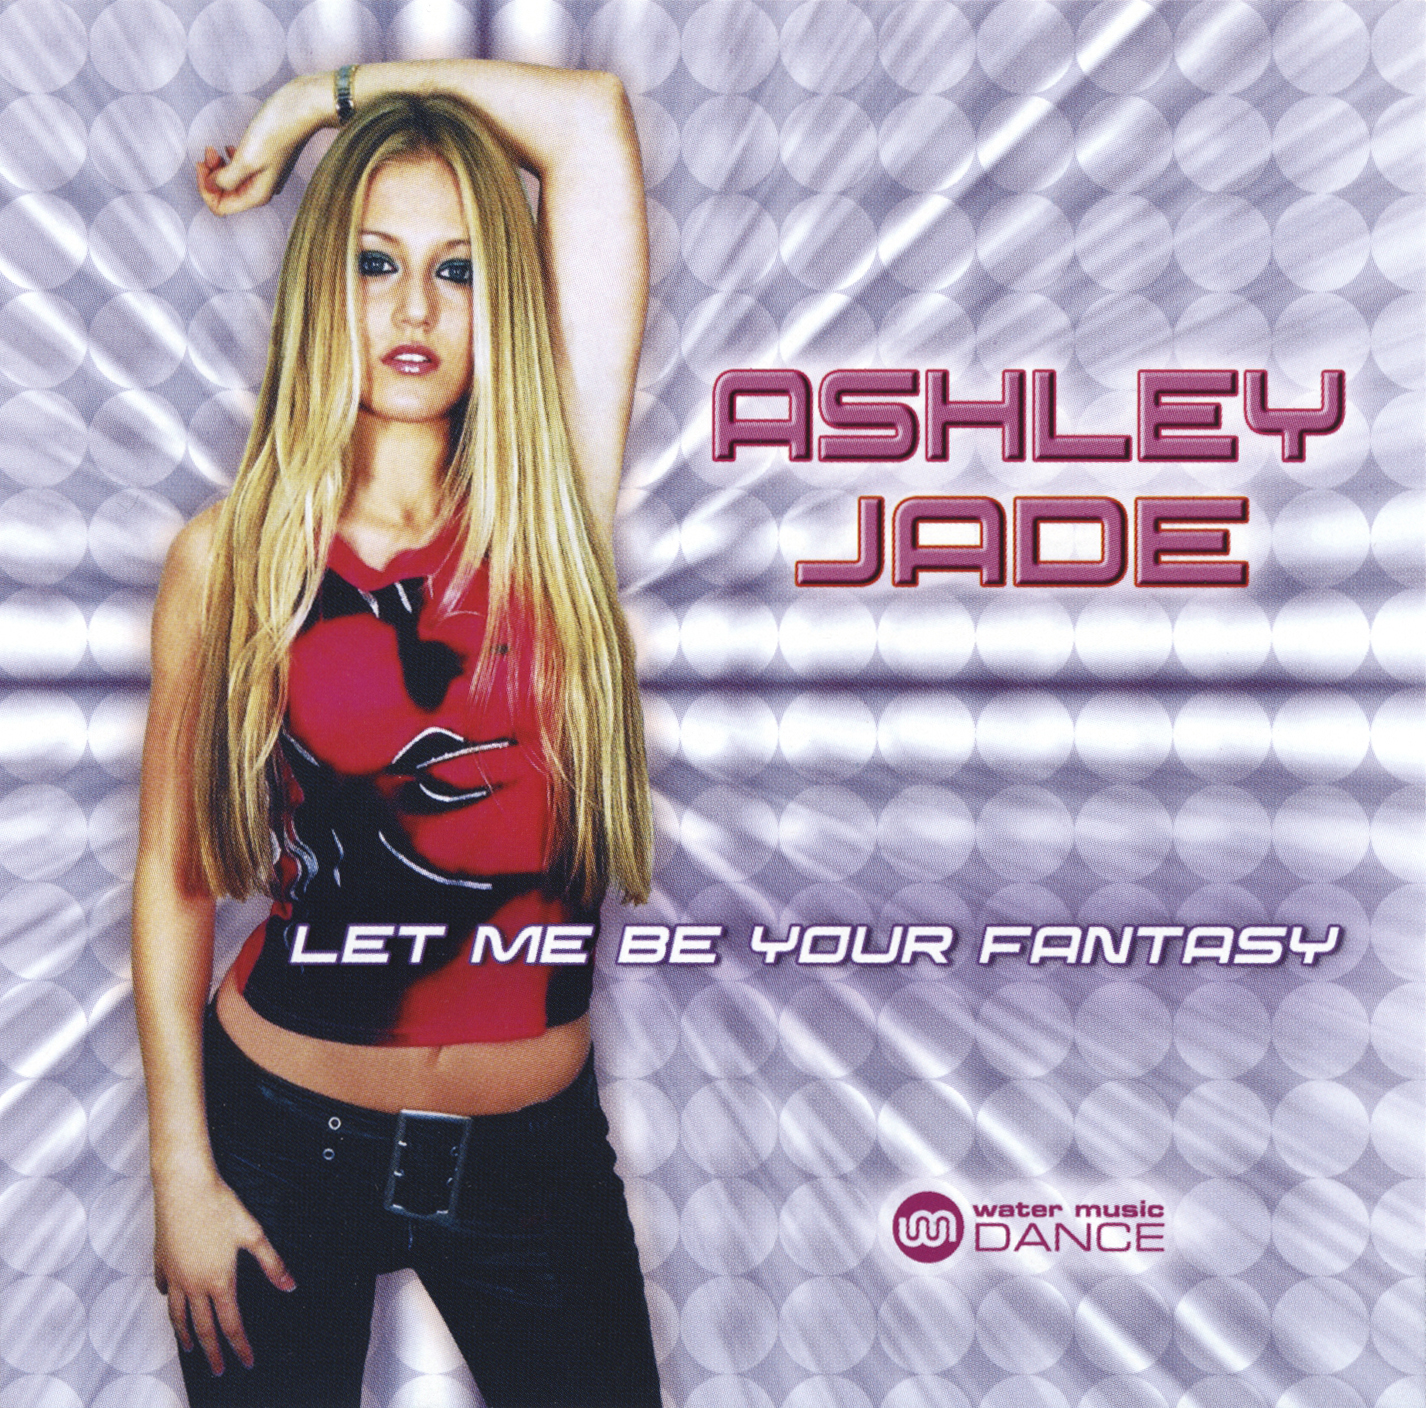 Jade ashley